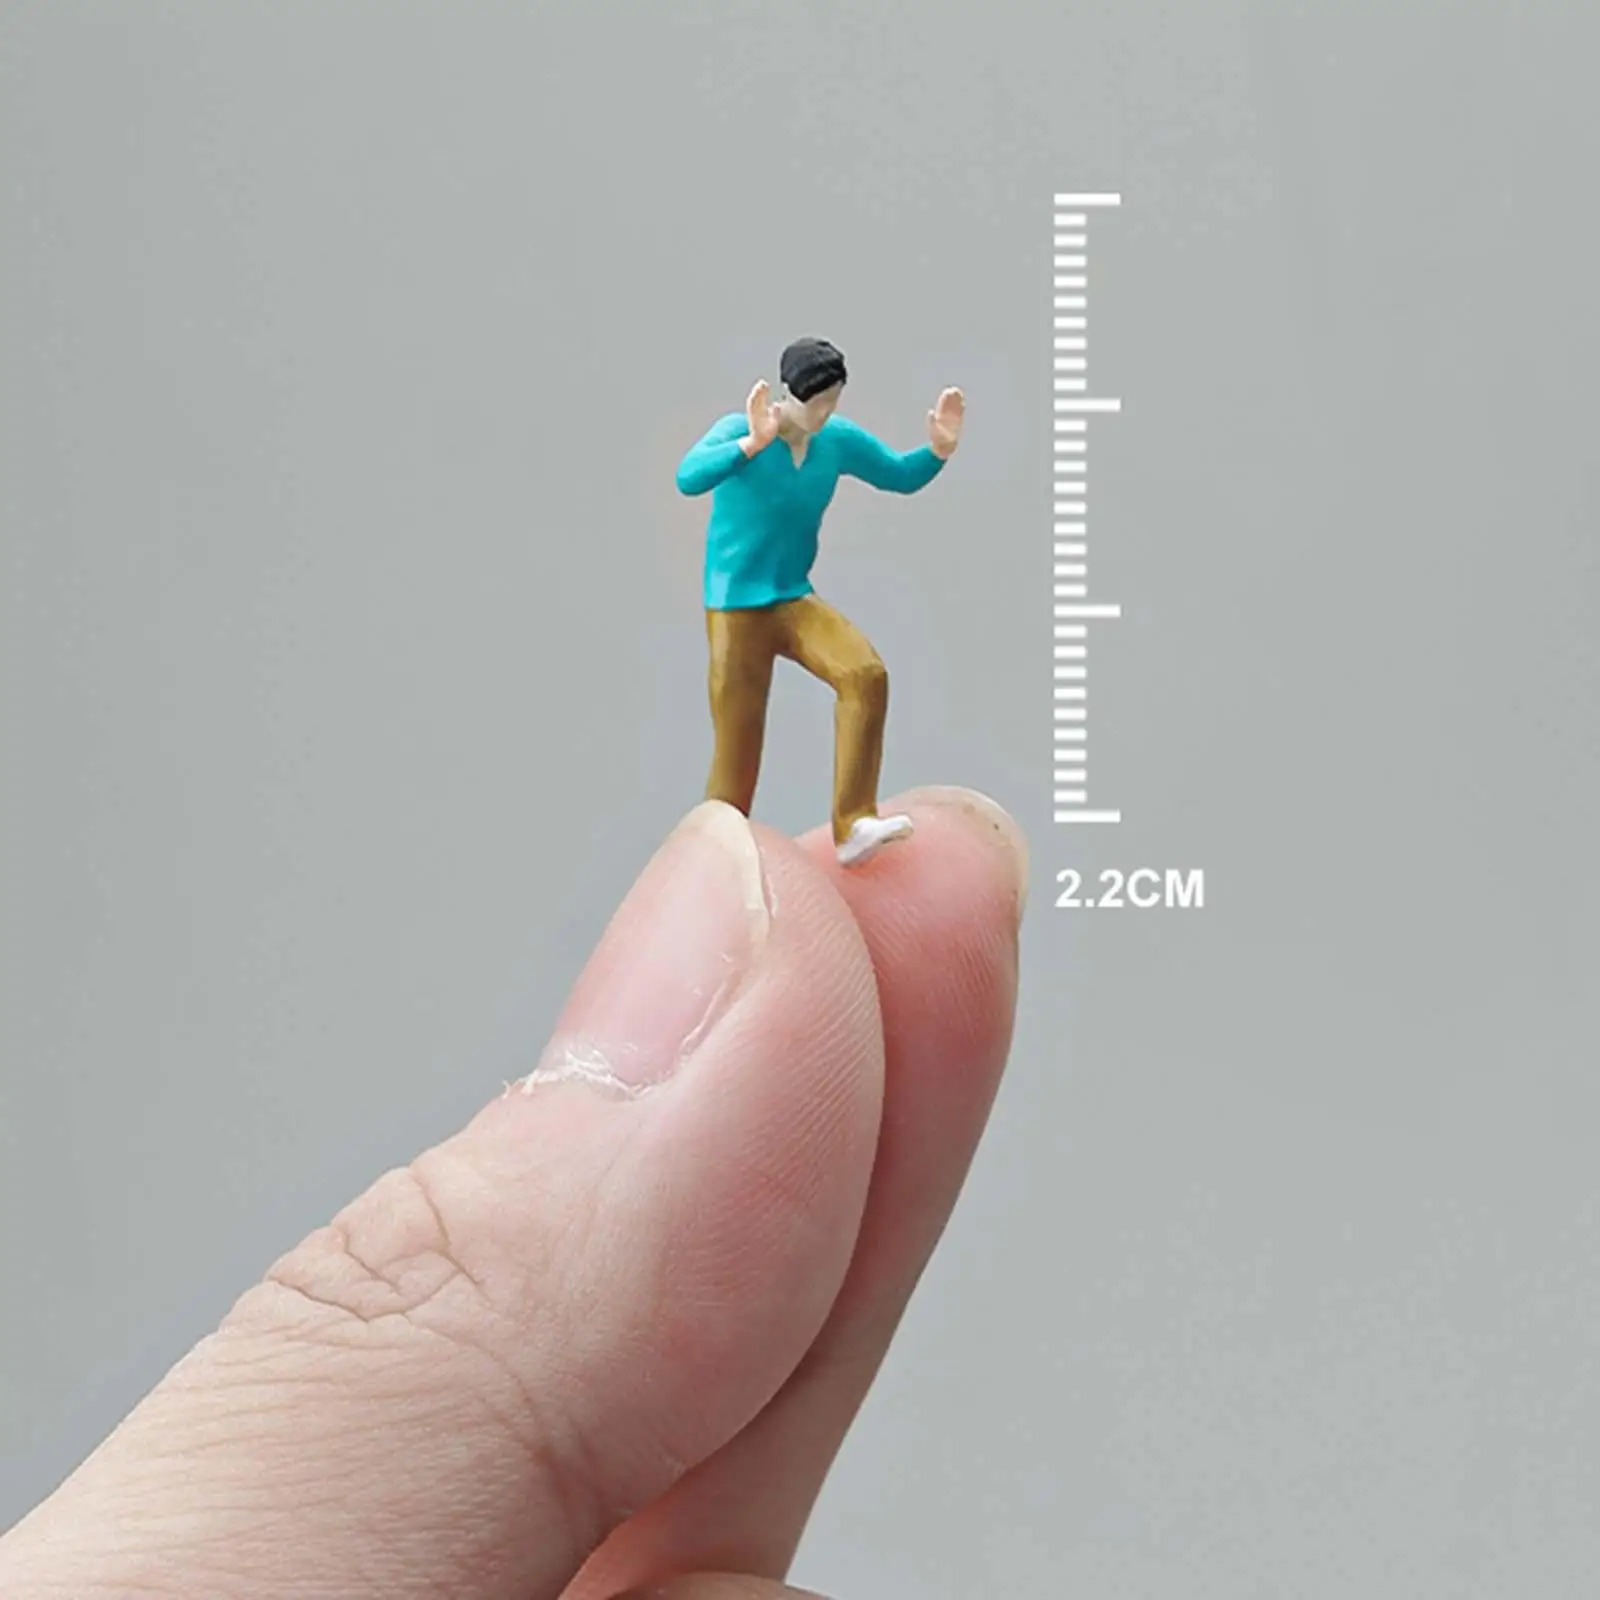 1/64 Model People Figures Movie Props Miniature People Model Tiny People 1/64 Scale Model Figures Micro Landscapes Decor